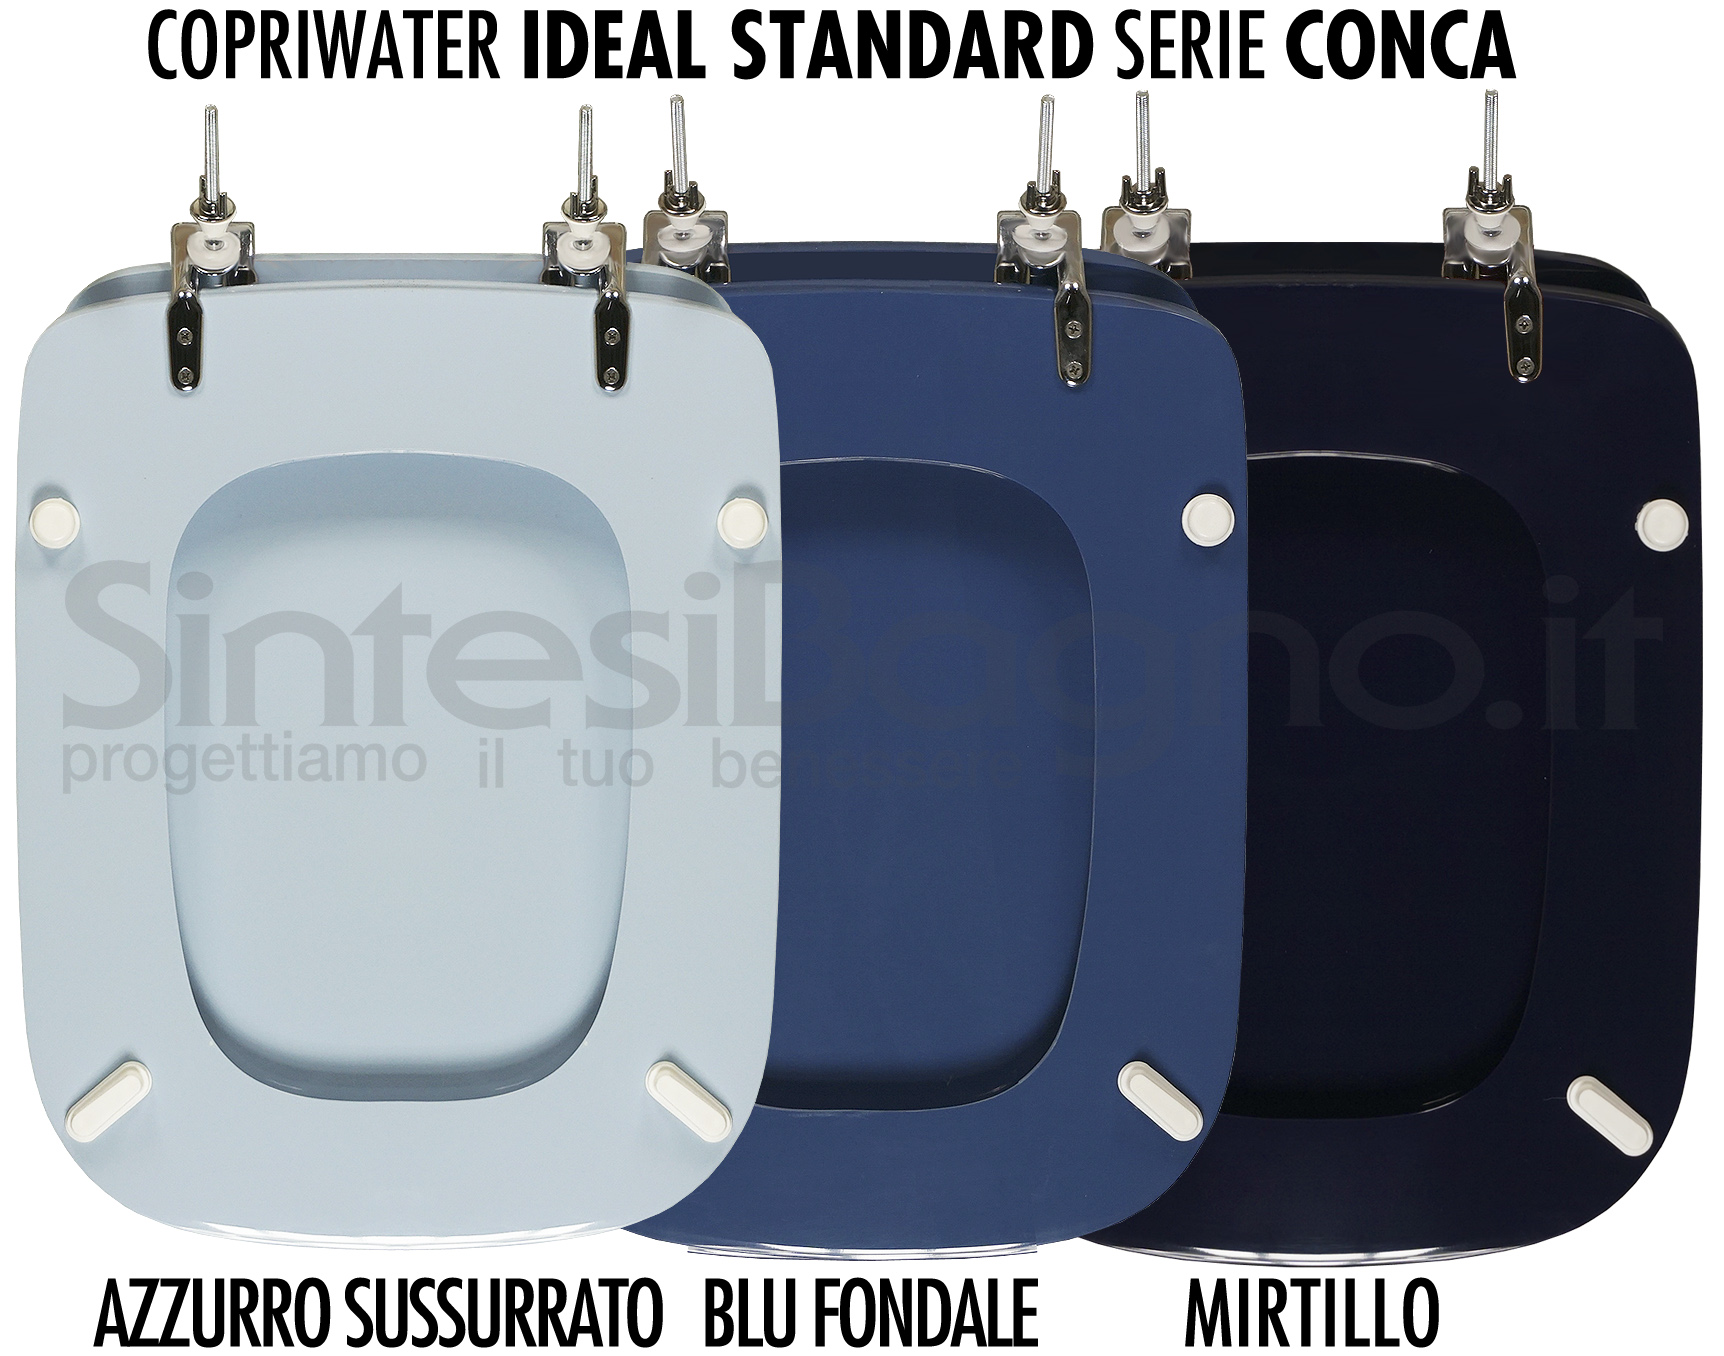 Copriwater Ideal Standard Conca Azzurro e blu